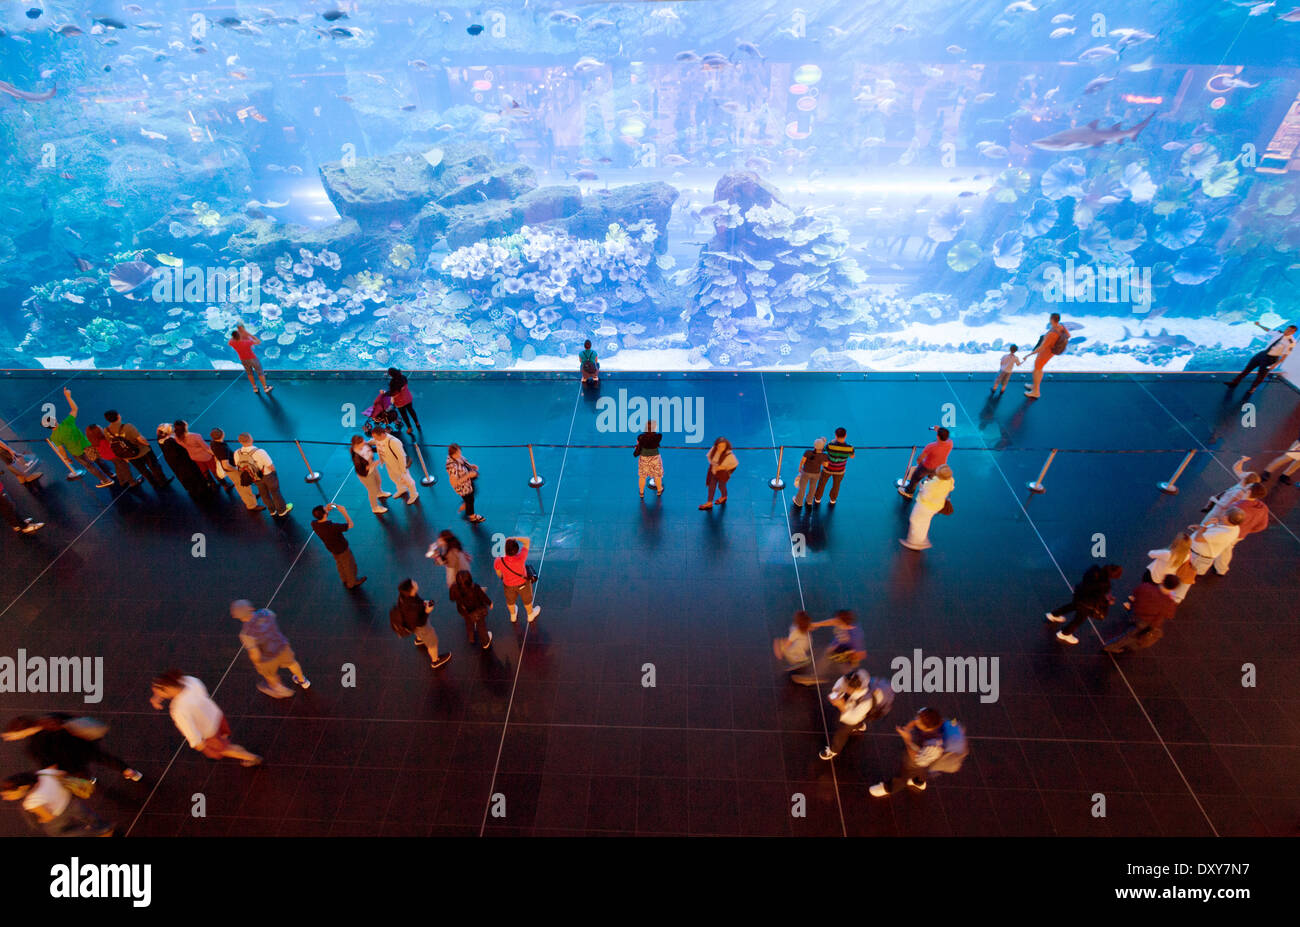 A view from above of people in the Dubai mall looking at the Dubai Aquarium, Dubai, UAE, United Arab Emirates Stock Photo